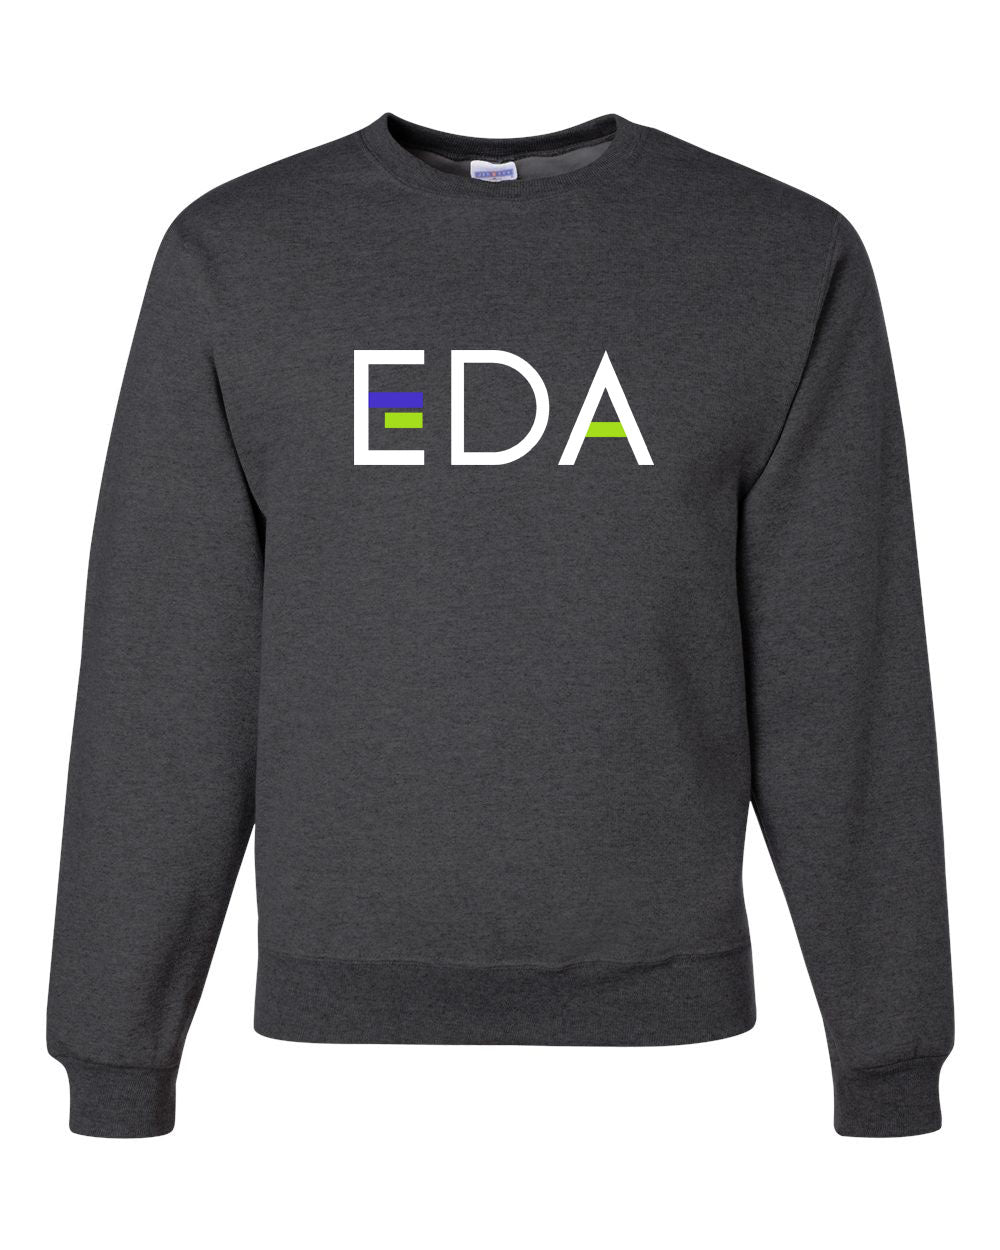 Evolution Dance Arts Design 4 non hooded sweatshirt